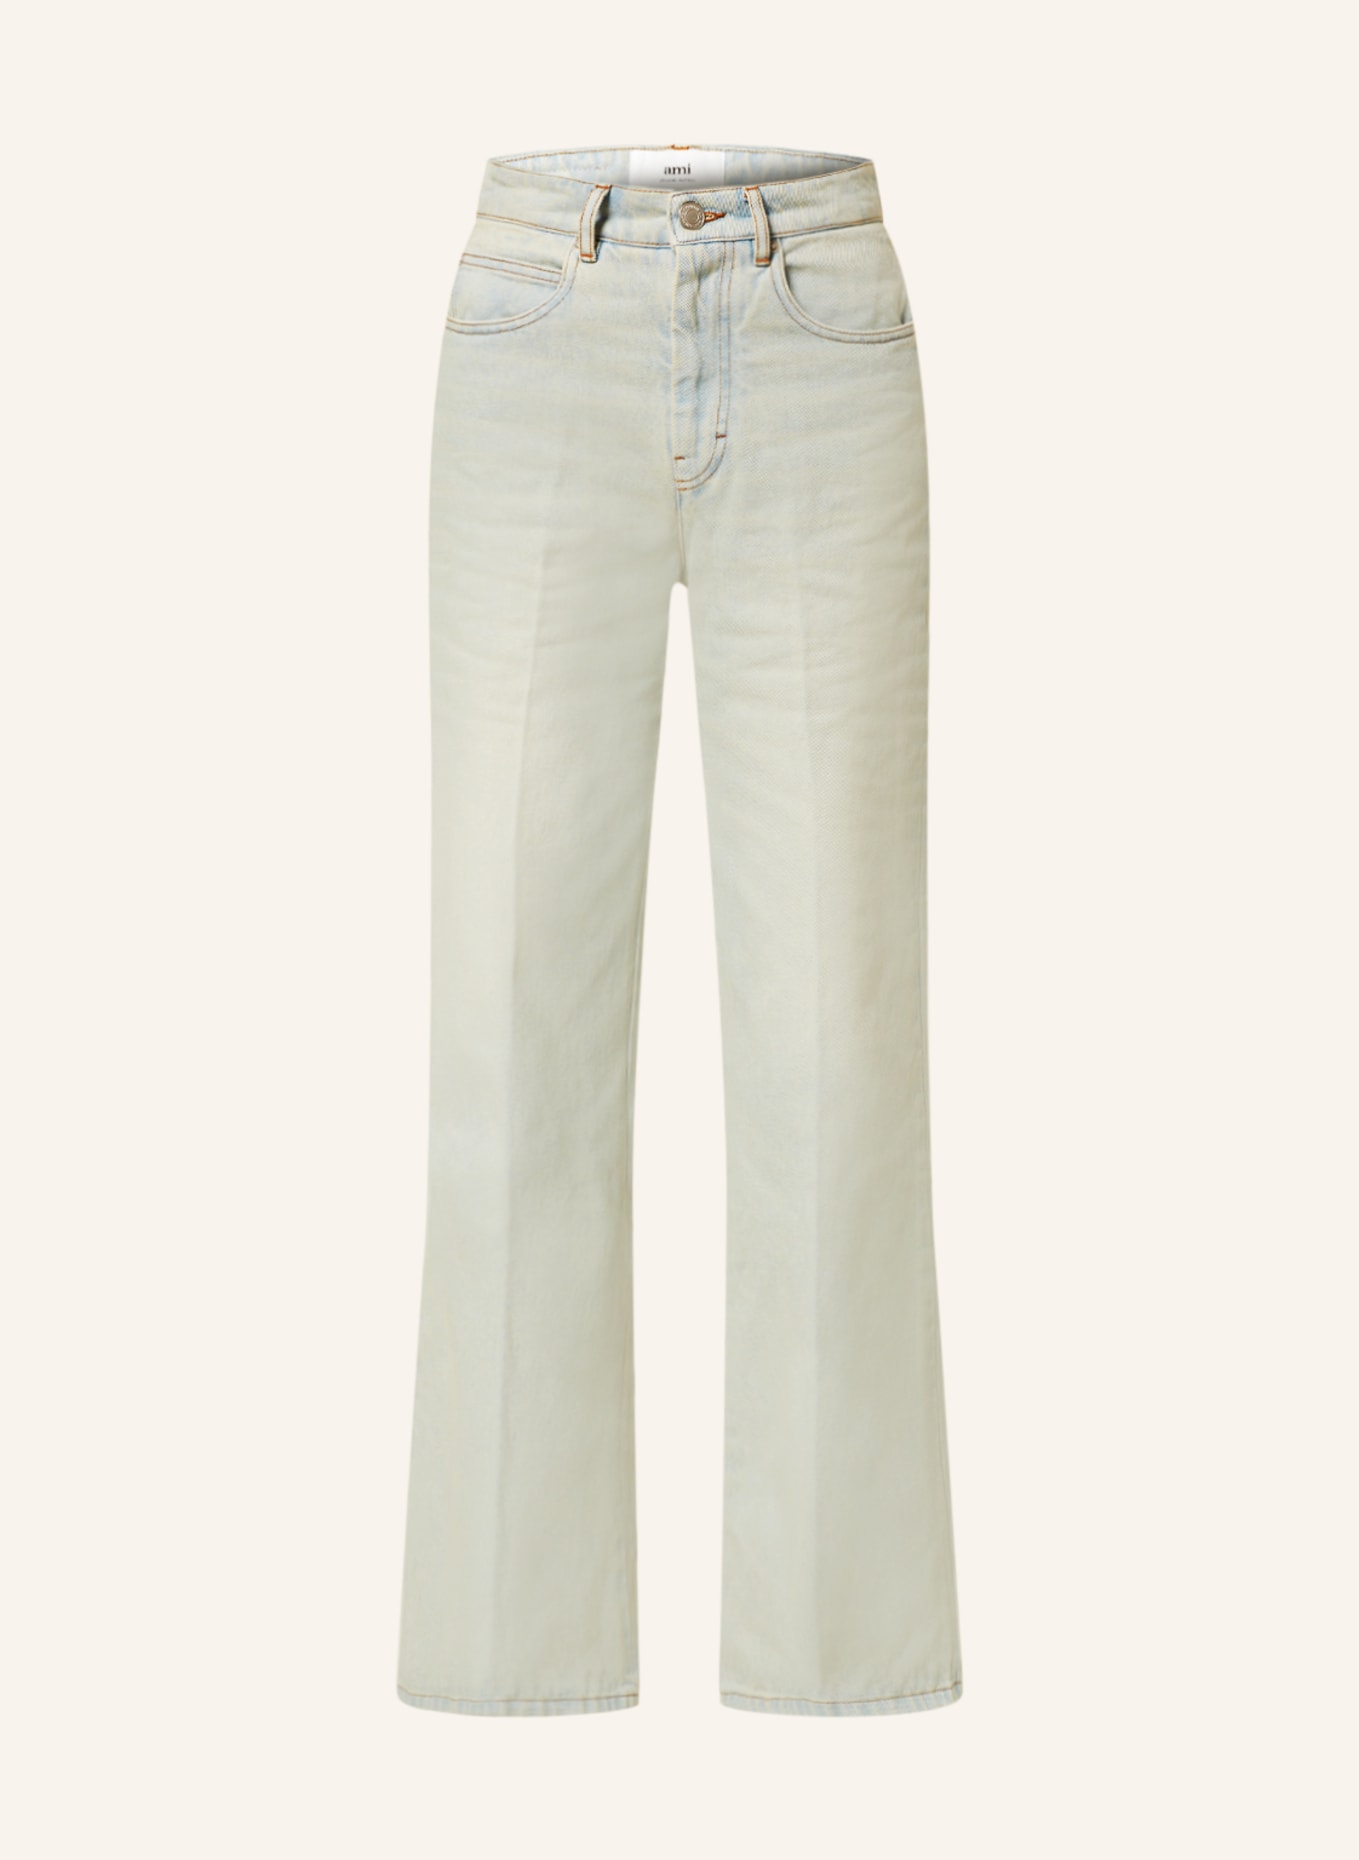 AMI PARIS Flared Jeans, Farbe: 448 BLEU JAVEL (Bild 1)